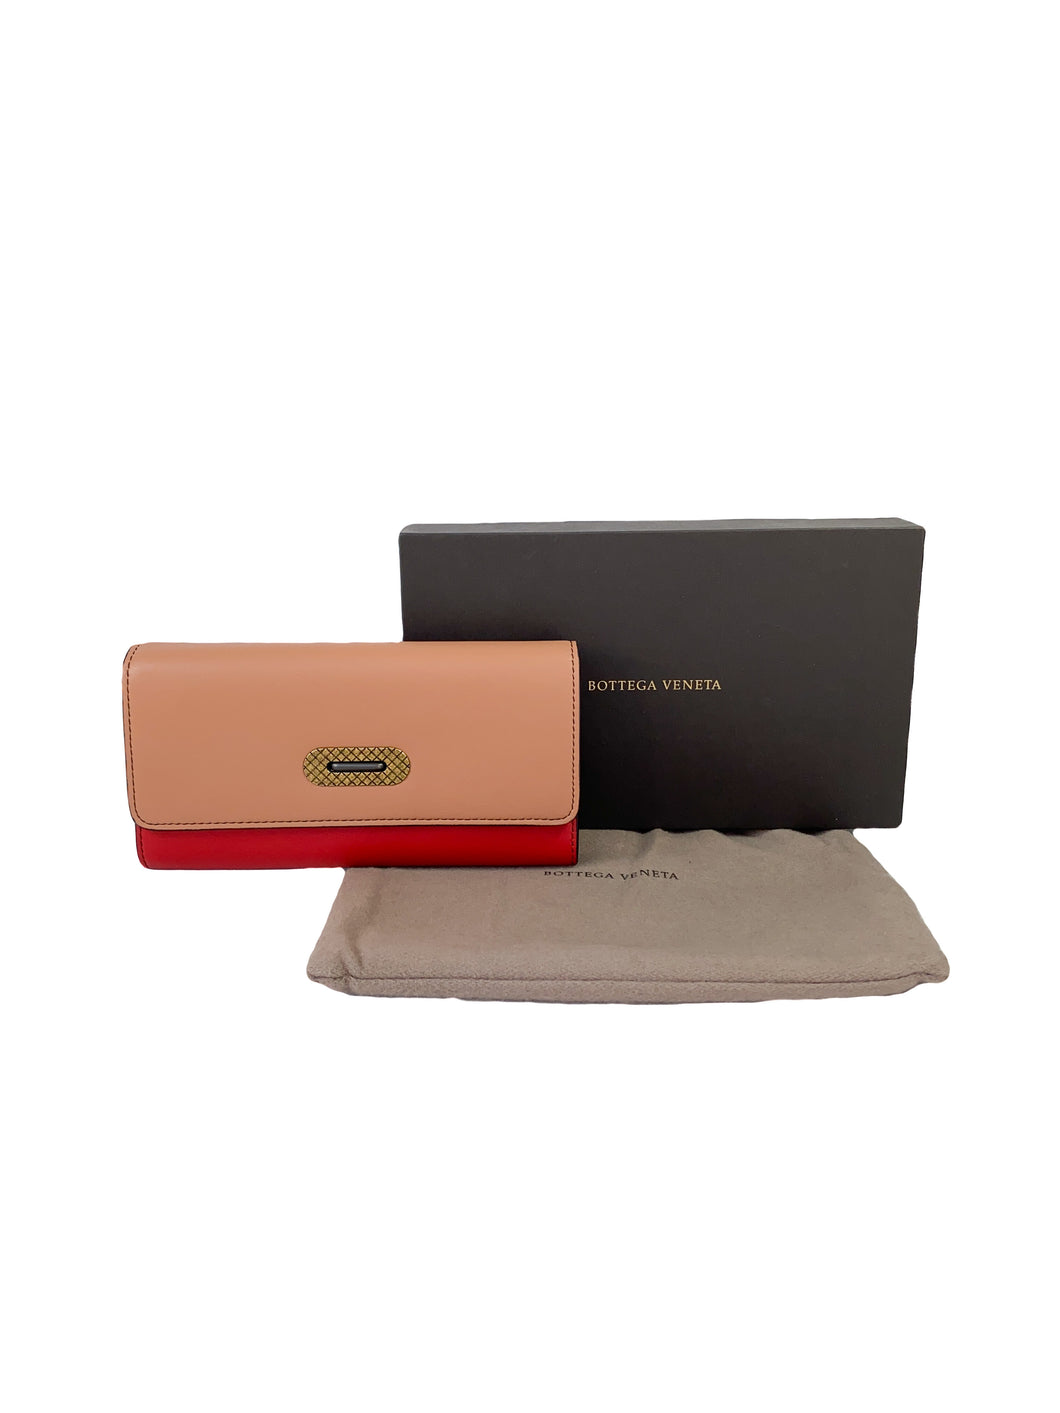 Bottega Veneta pink, red, and tan leather color block wallet NEW